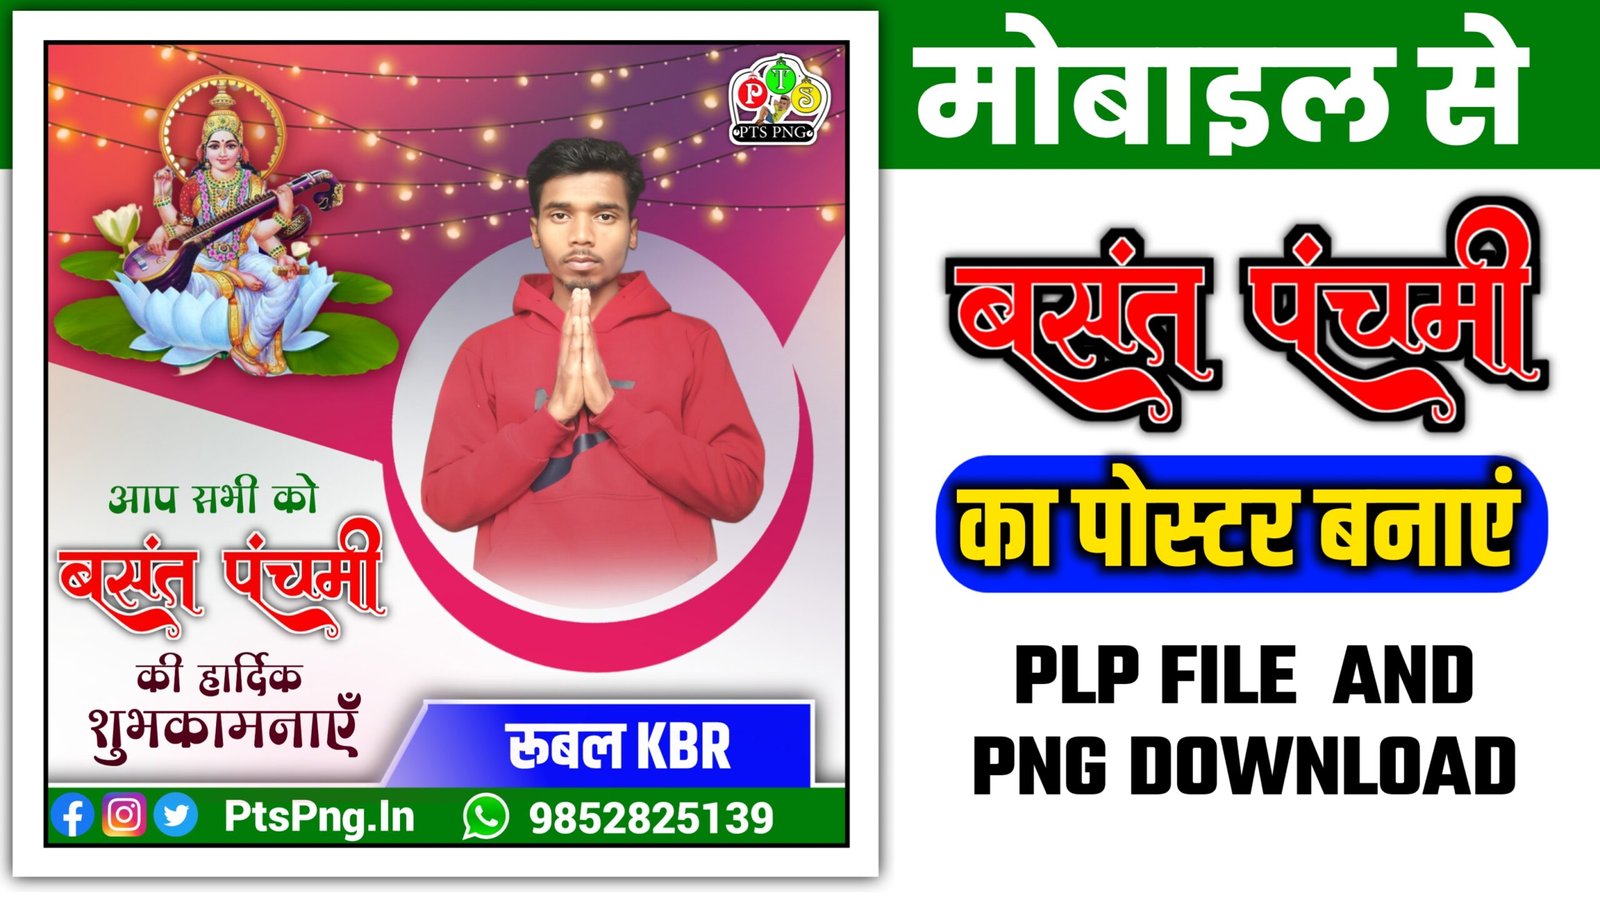 Basant panchmi poster kaise banaen| Saraswati Puja poster kaise banaen| Basant panchmi banner editing